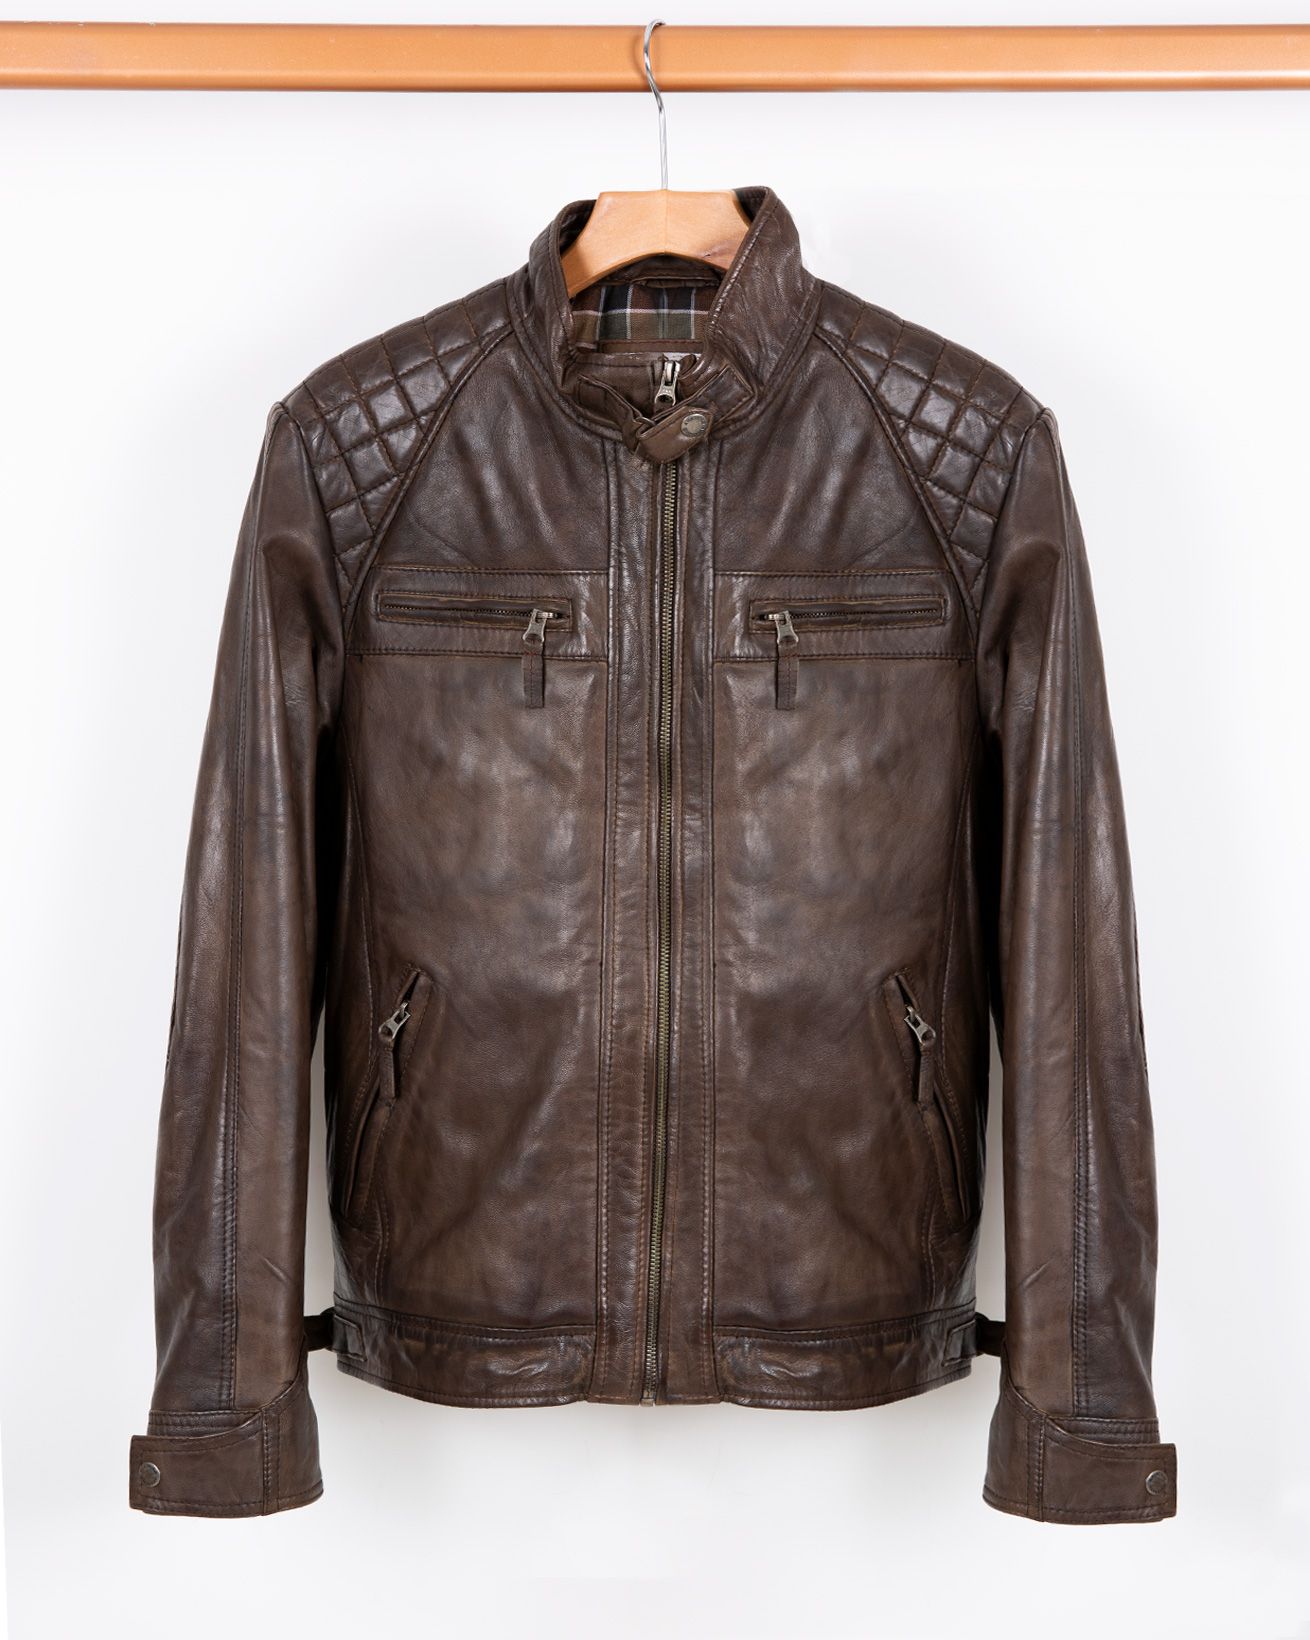 7263-lfs-mens biker jacket.jpg